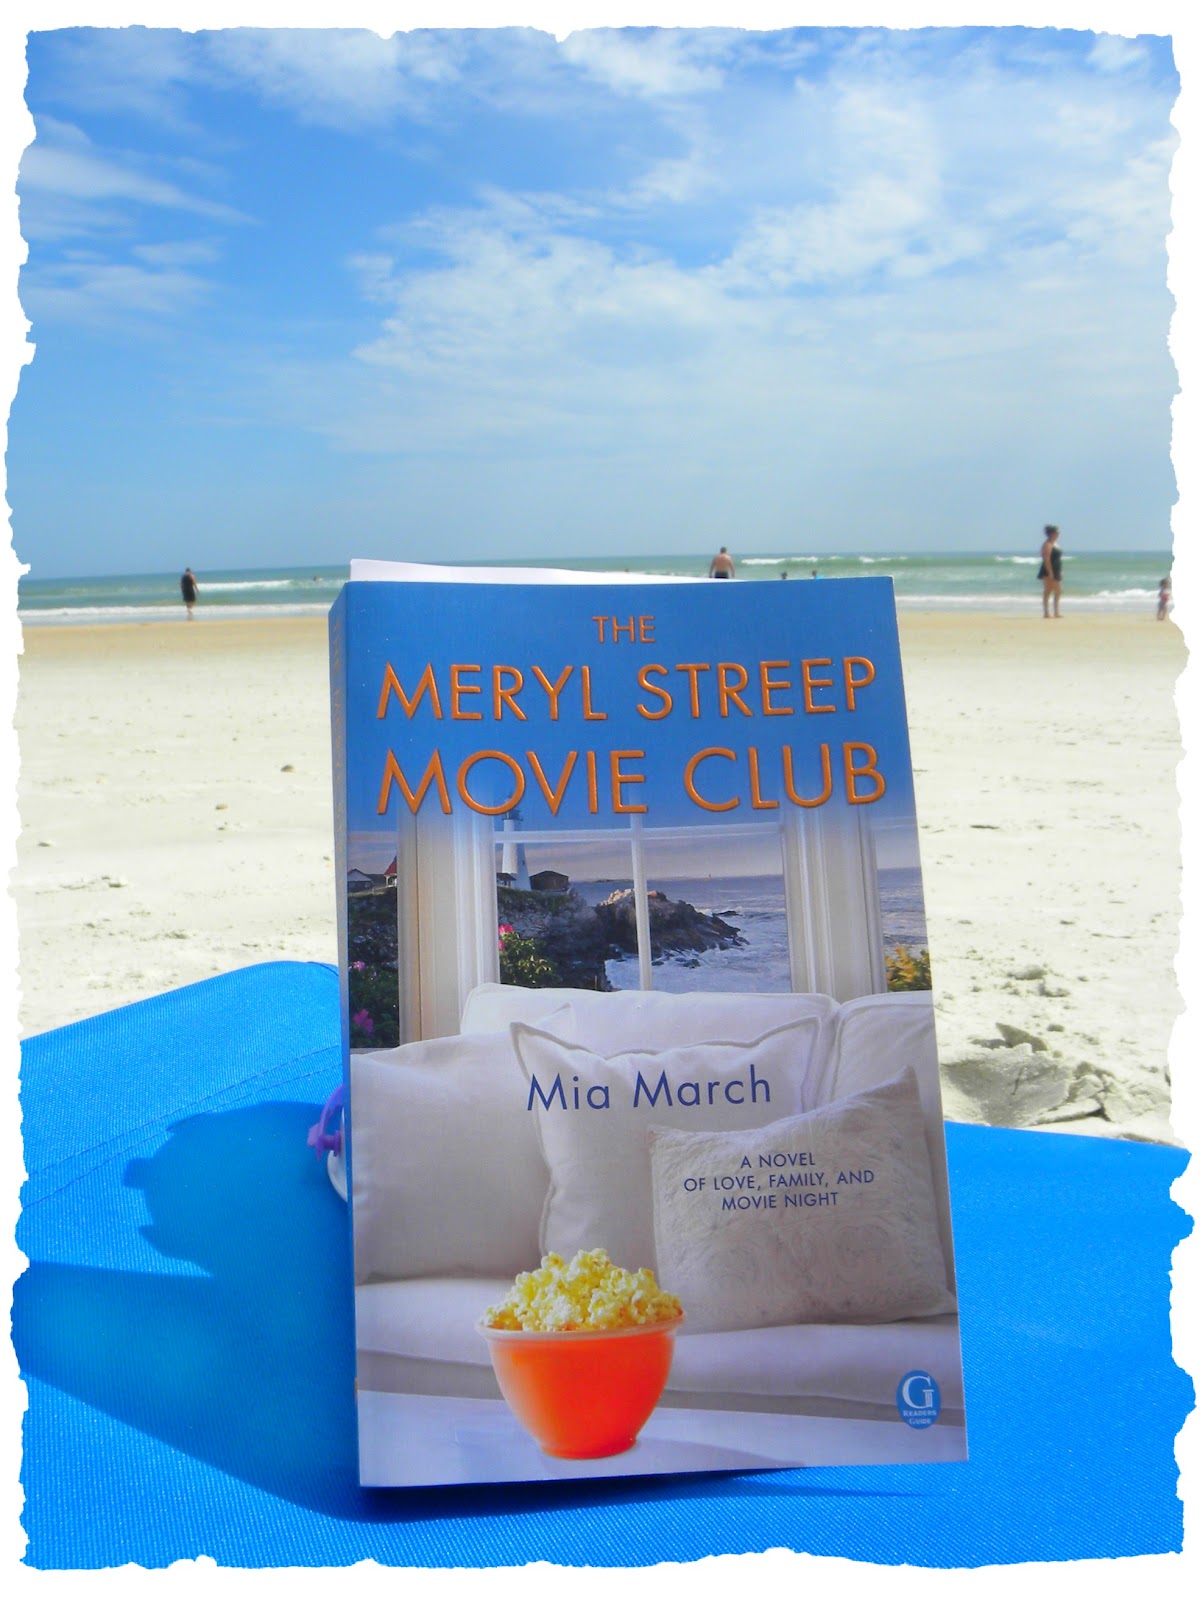 http://4.bp.blogspot.com/-LQ-VOmdRF3g/UCq0jVjCtgI/AAAAAAAABwo/klHuyaLN7Vo/s1600/the+Meryl+Streep+Movie+Club,+Mia+March,+review+Meryl+streep+movie+club,+shereads.jpg